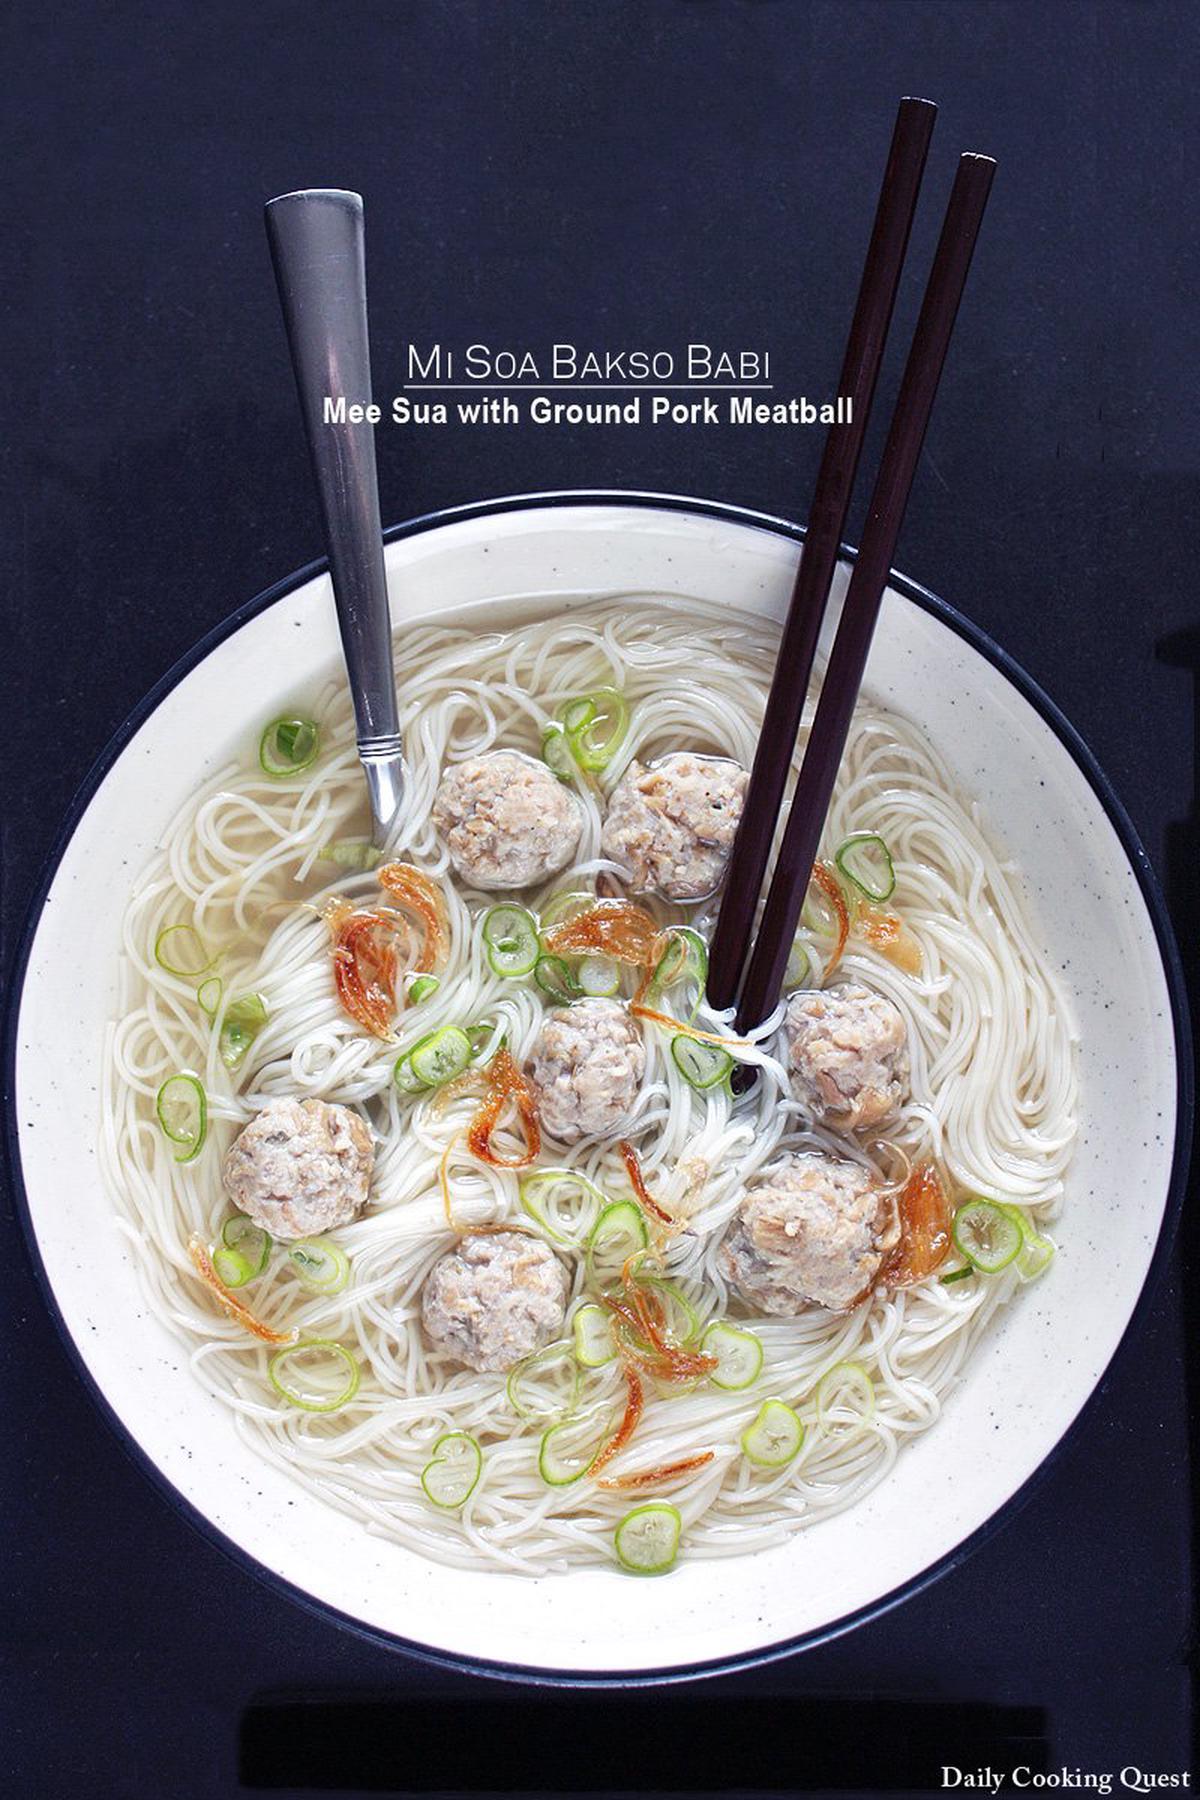 Mi Soa Bakso Babi - Mee Sua with Ground Pork Meatball